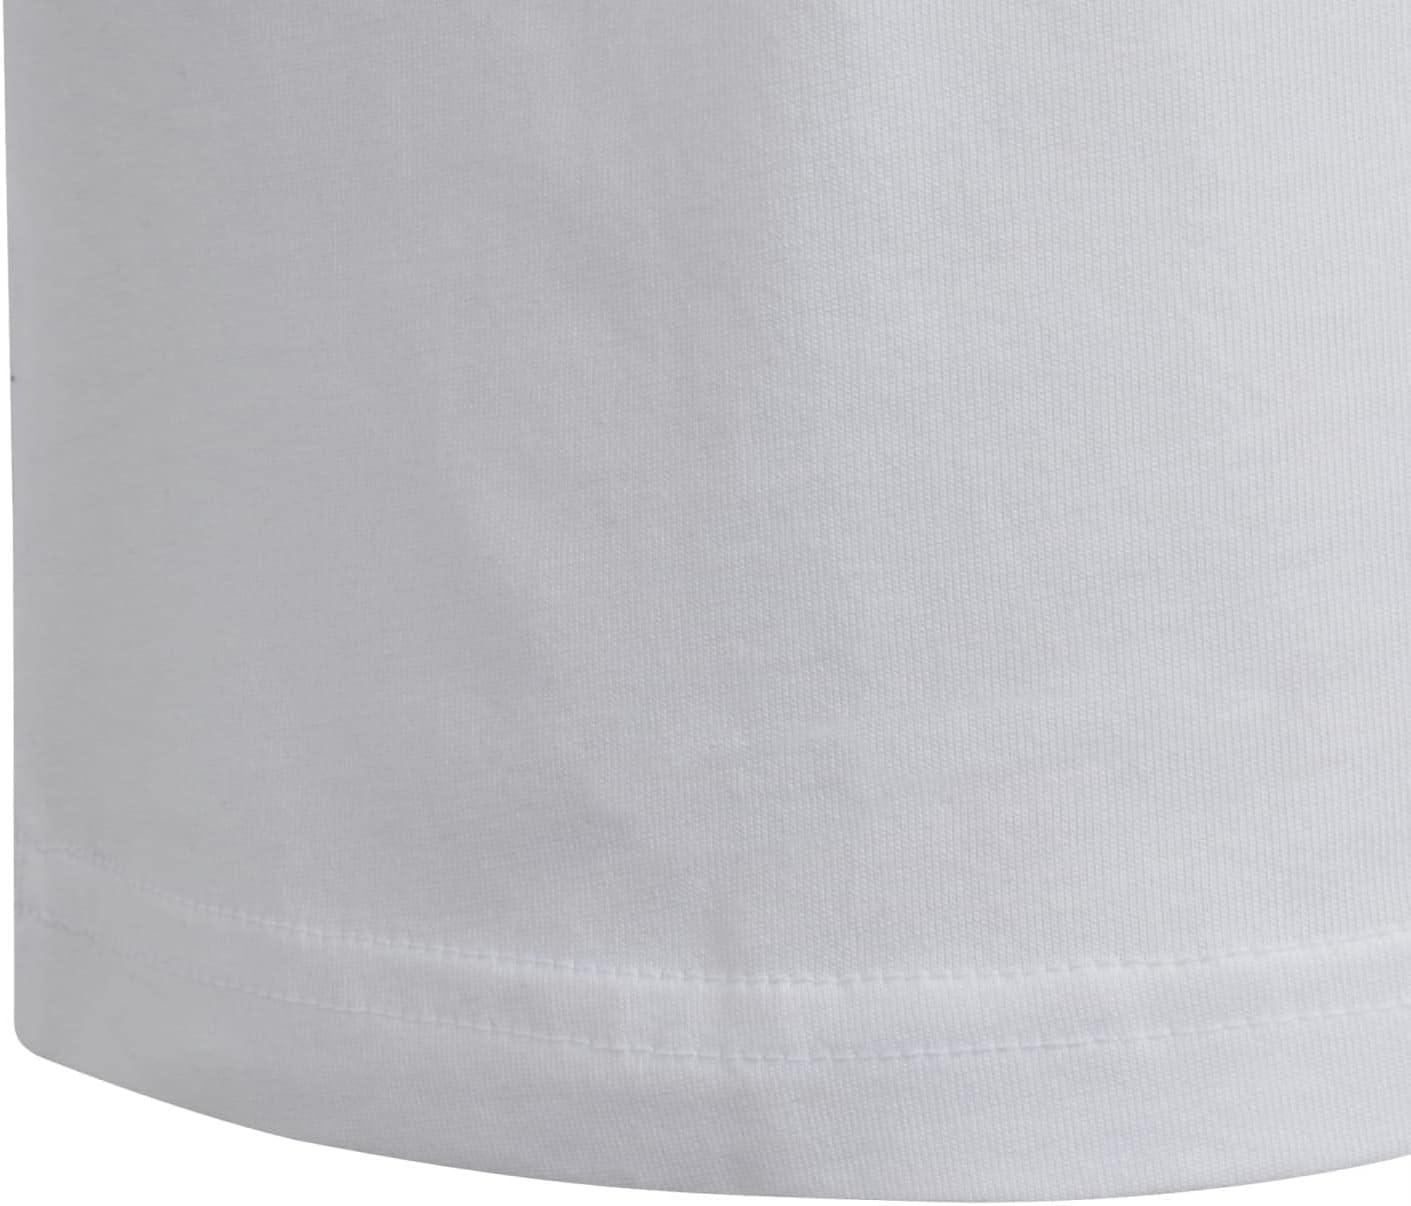 adidas Girl's Essentials Linear Logo Cotton Slim Fit T-Shirt